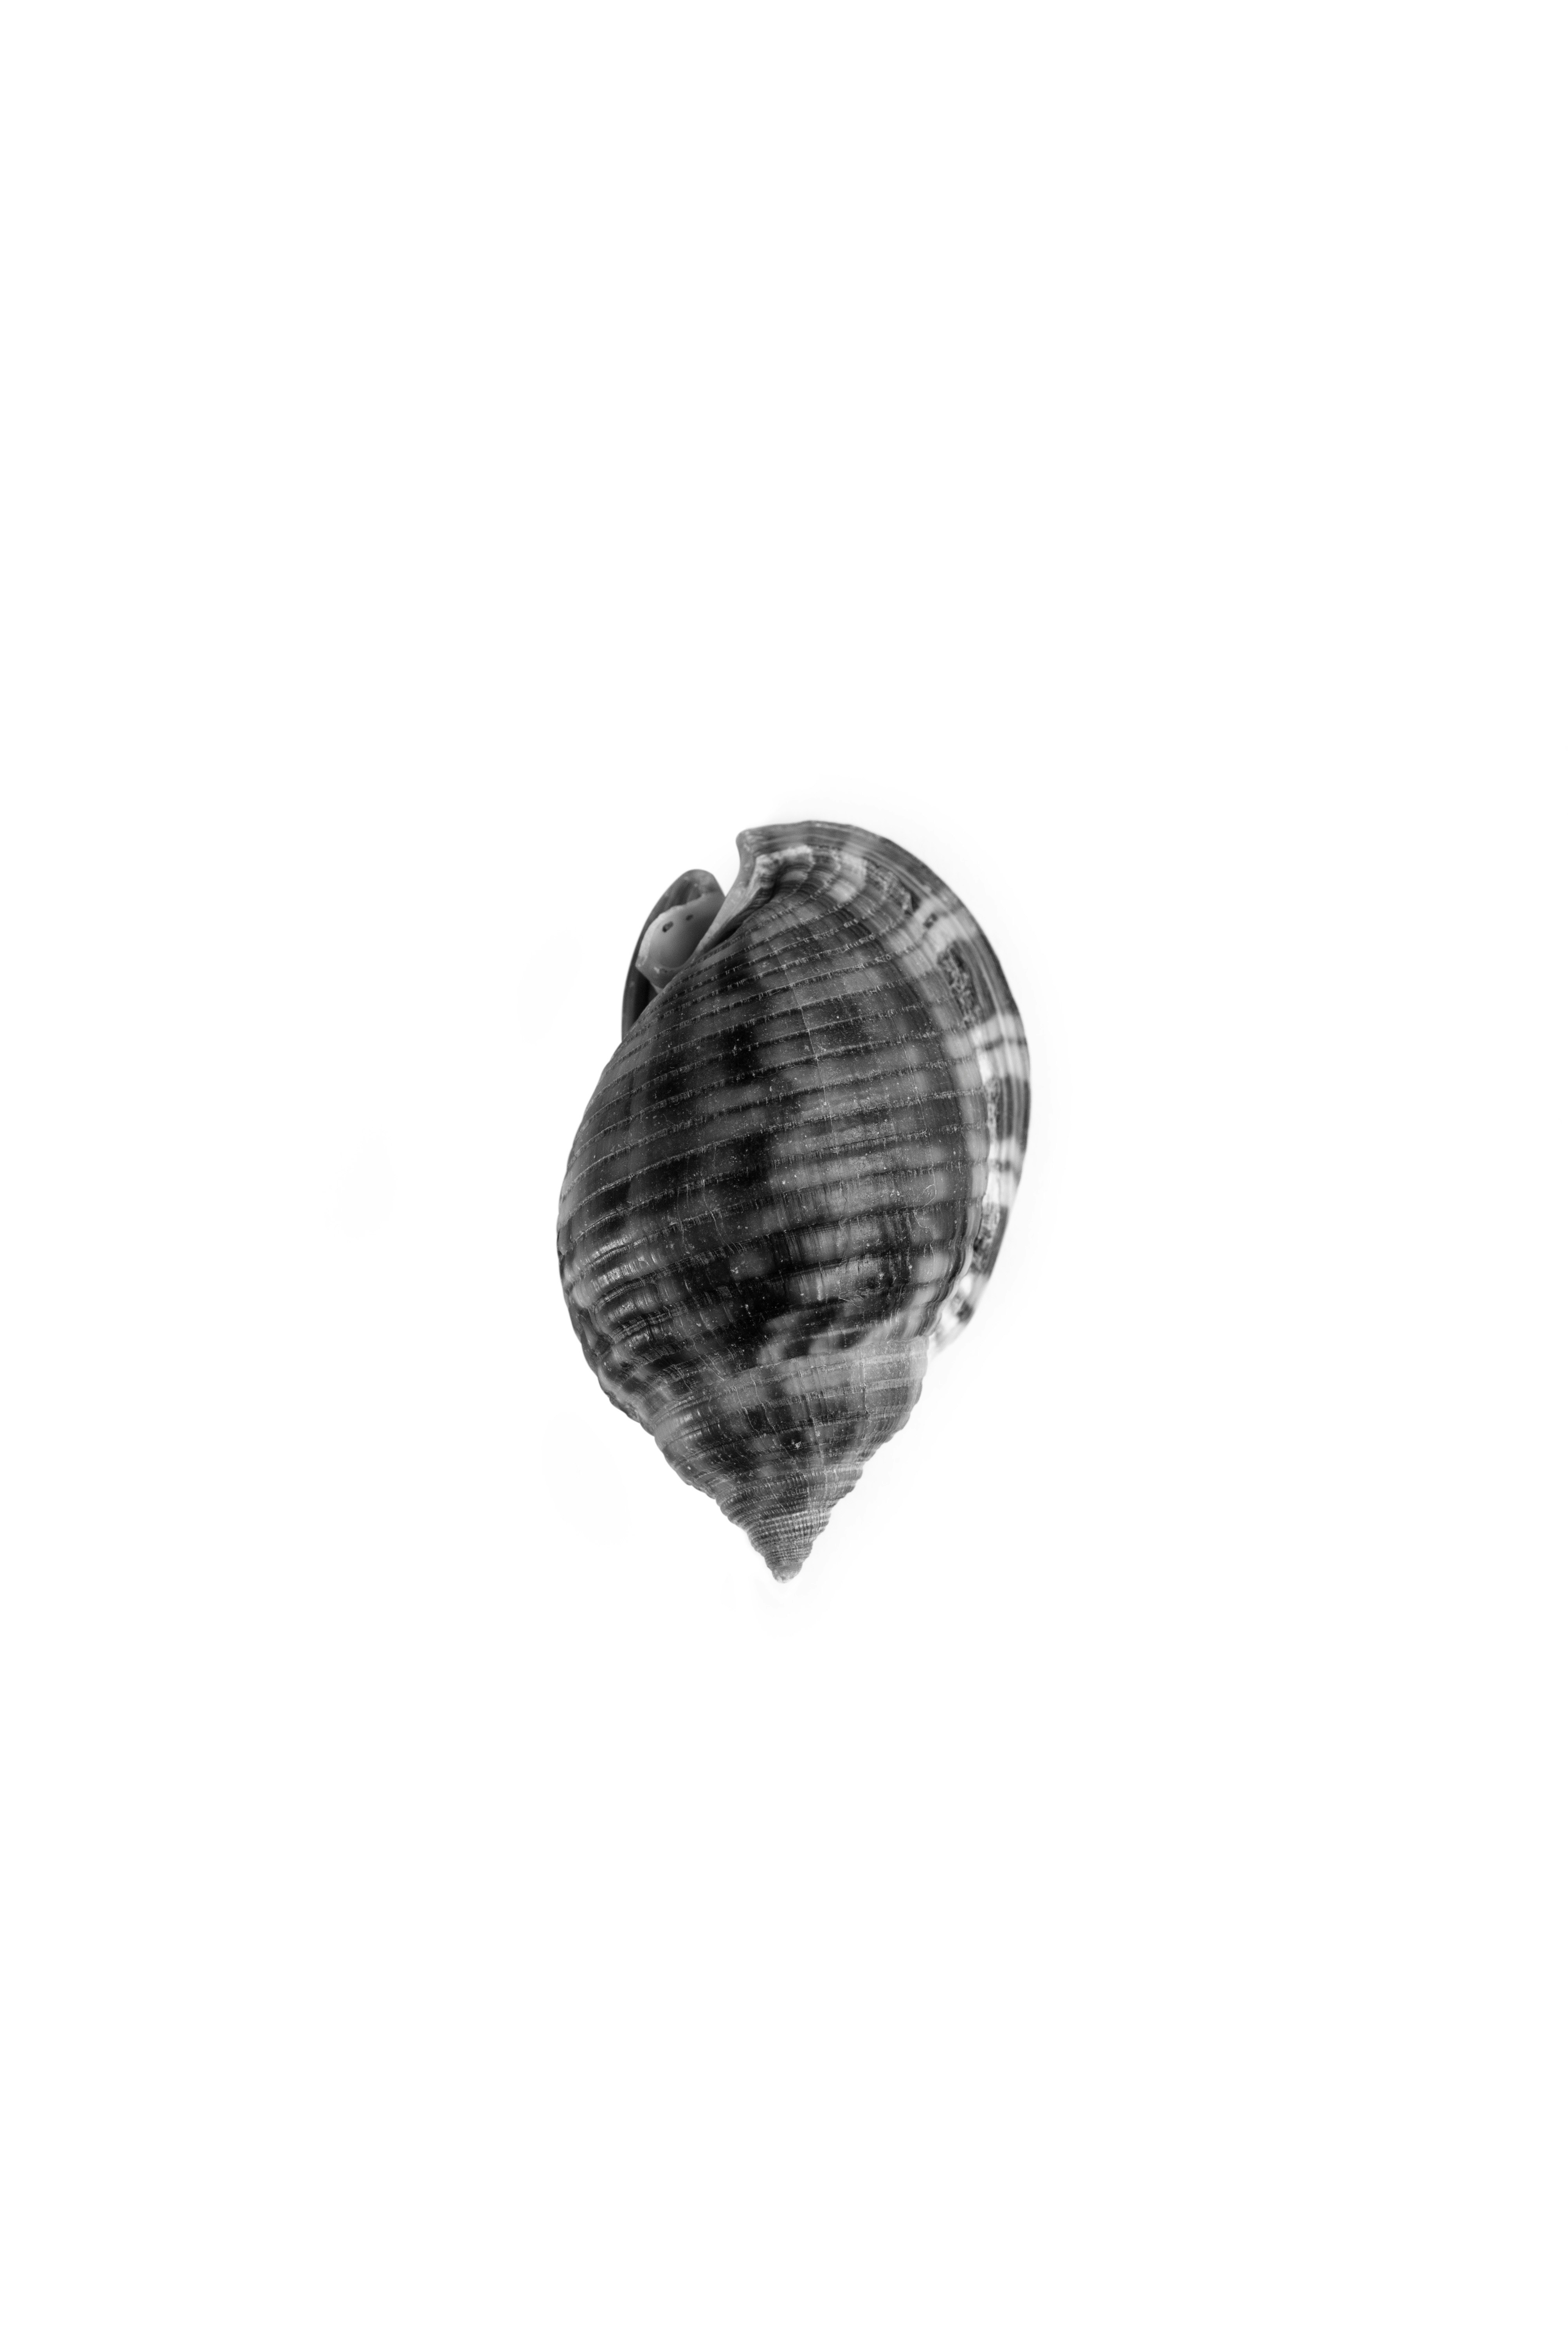 grayscale photo of a heart shaped stone